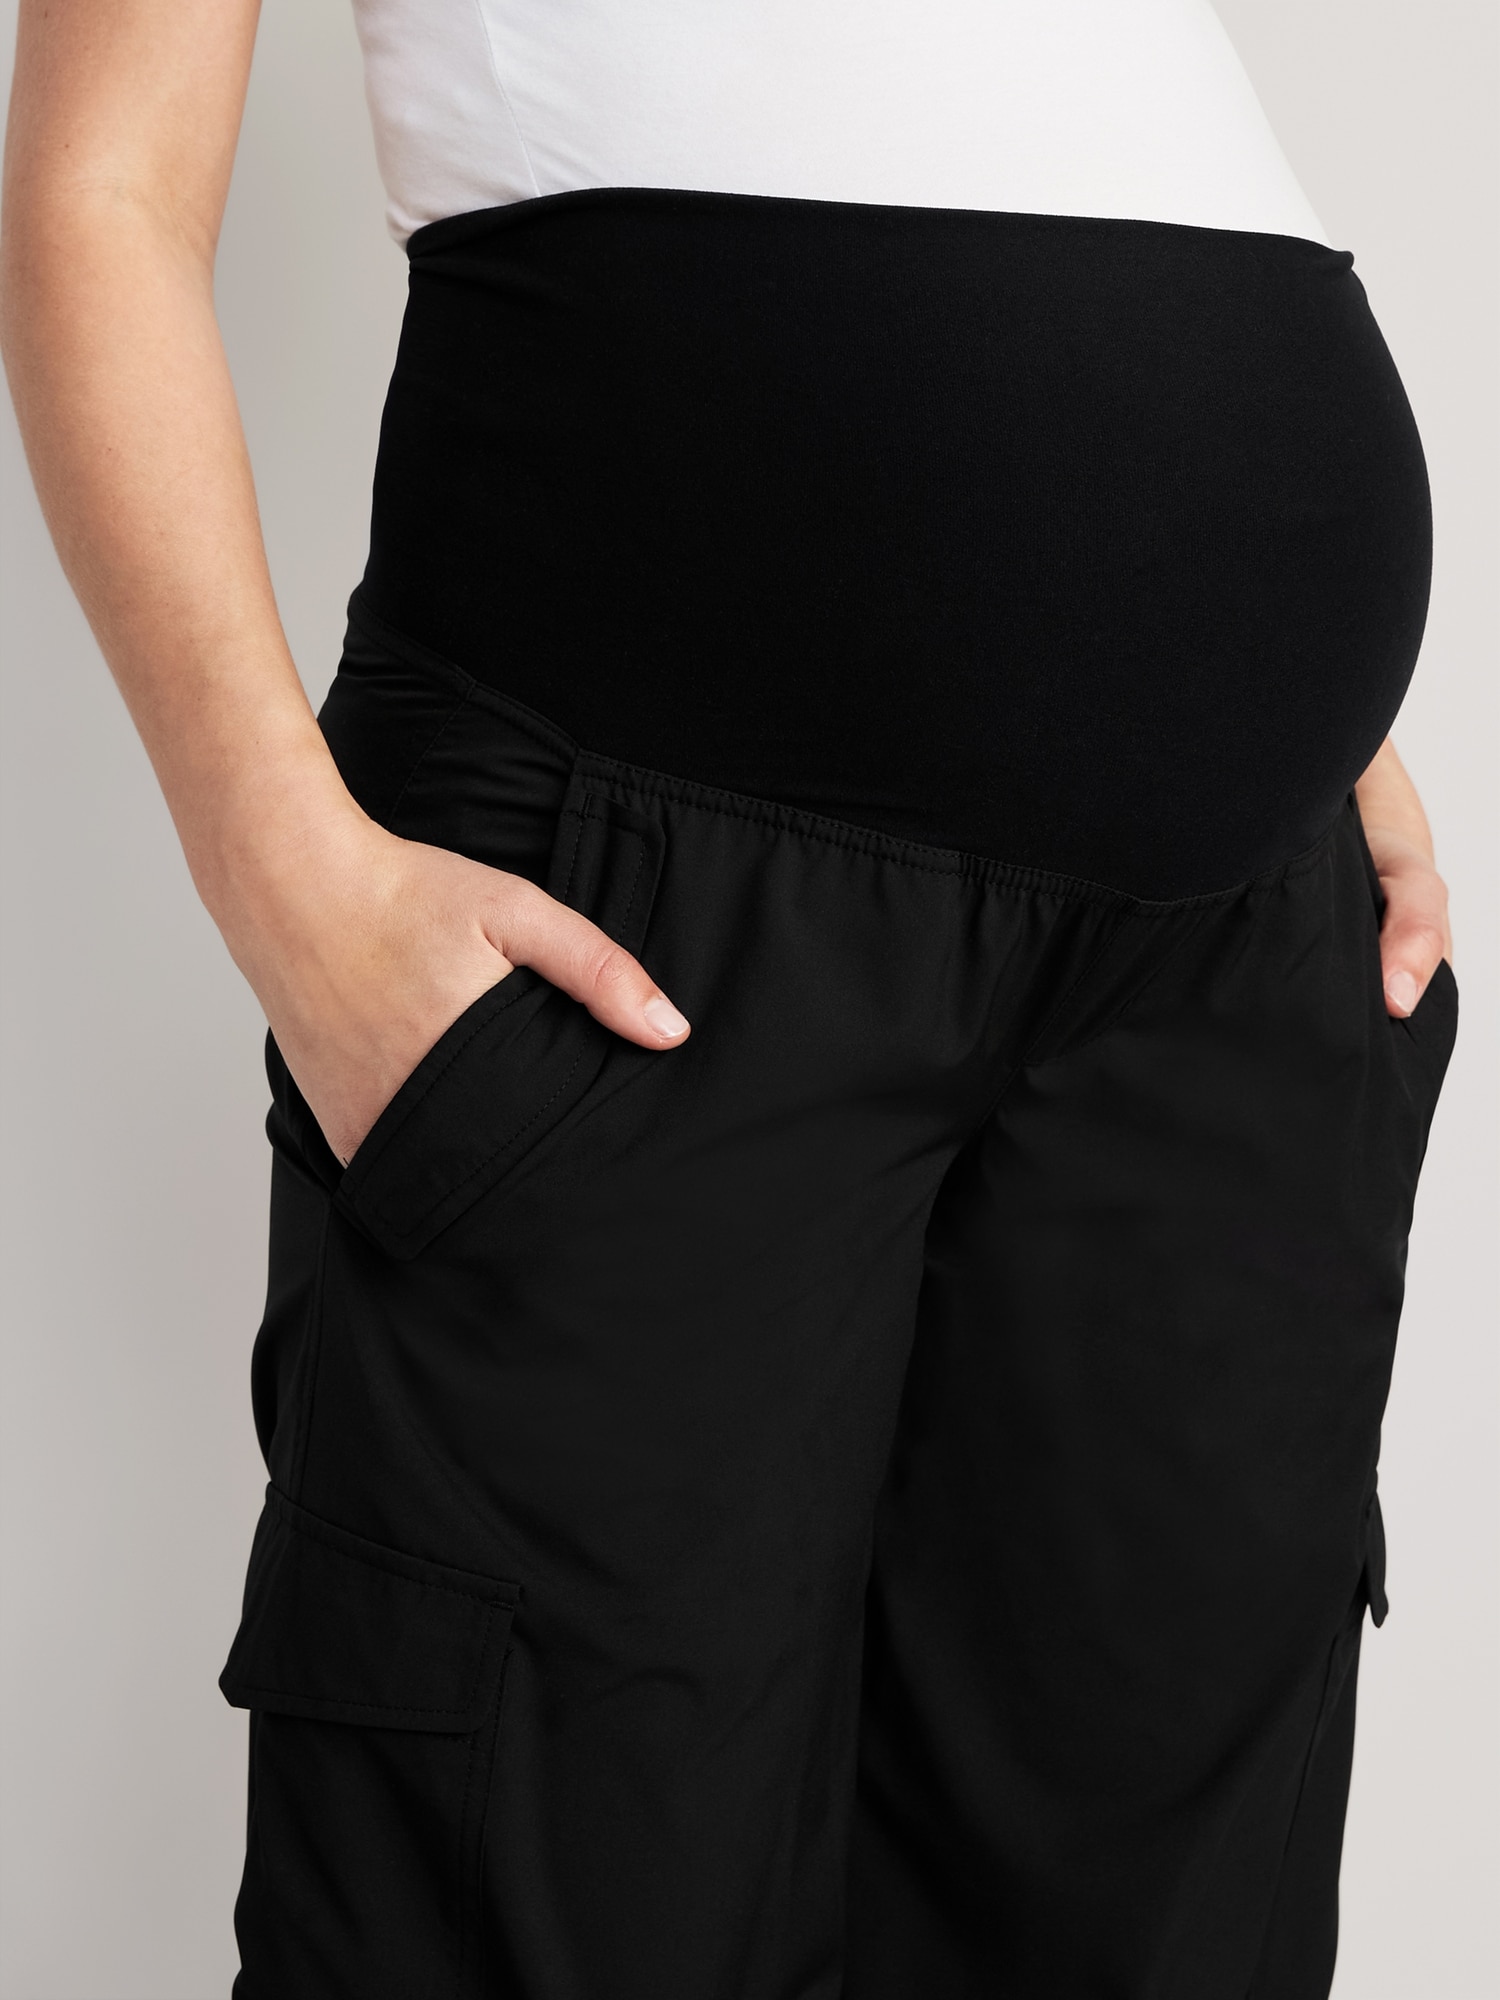 Shop Black Maternity Dress Pants - MARION Maternity – MARION Maternity